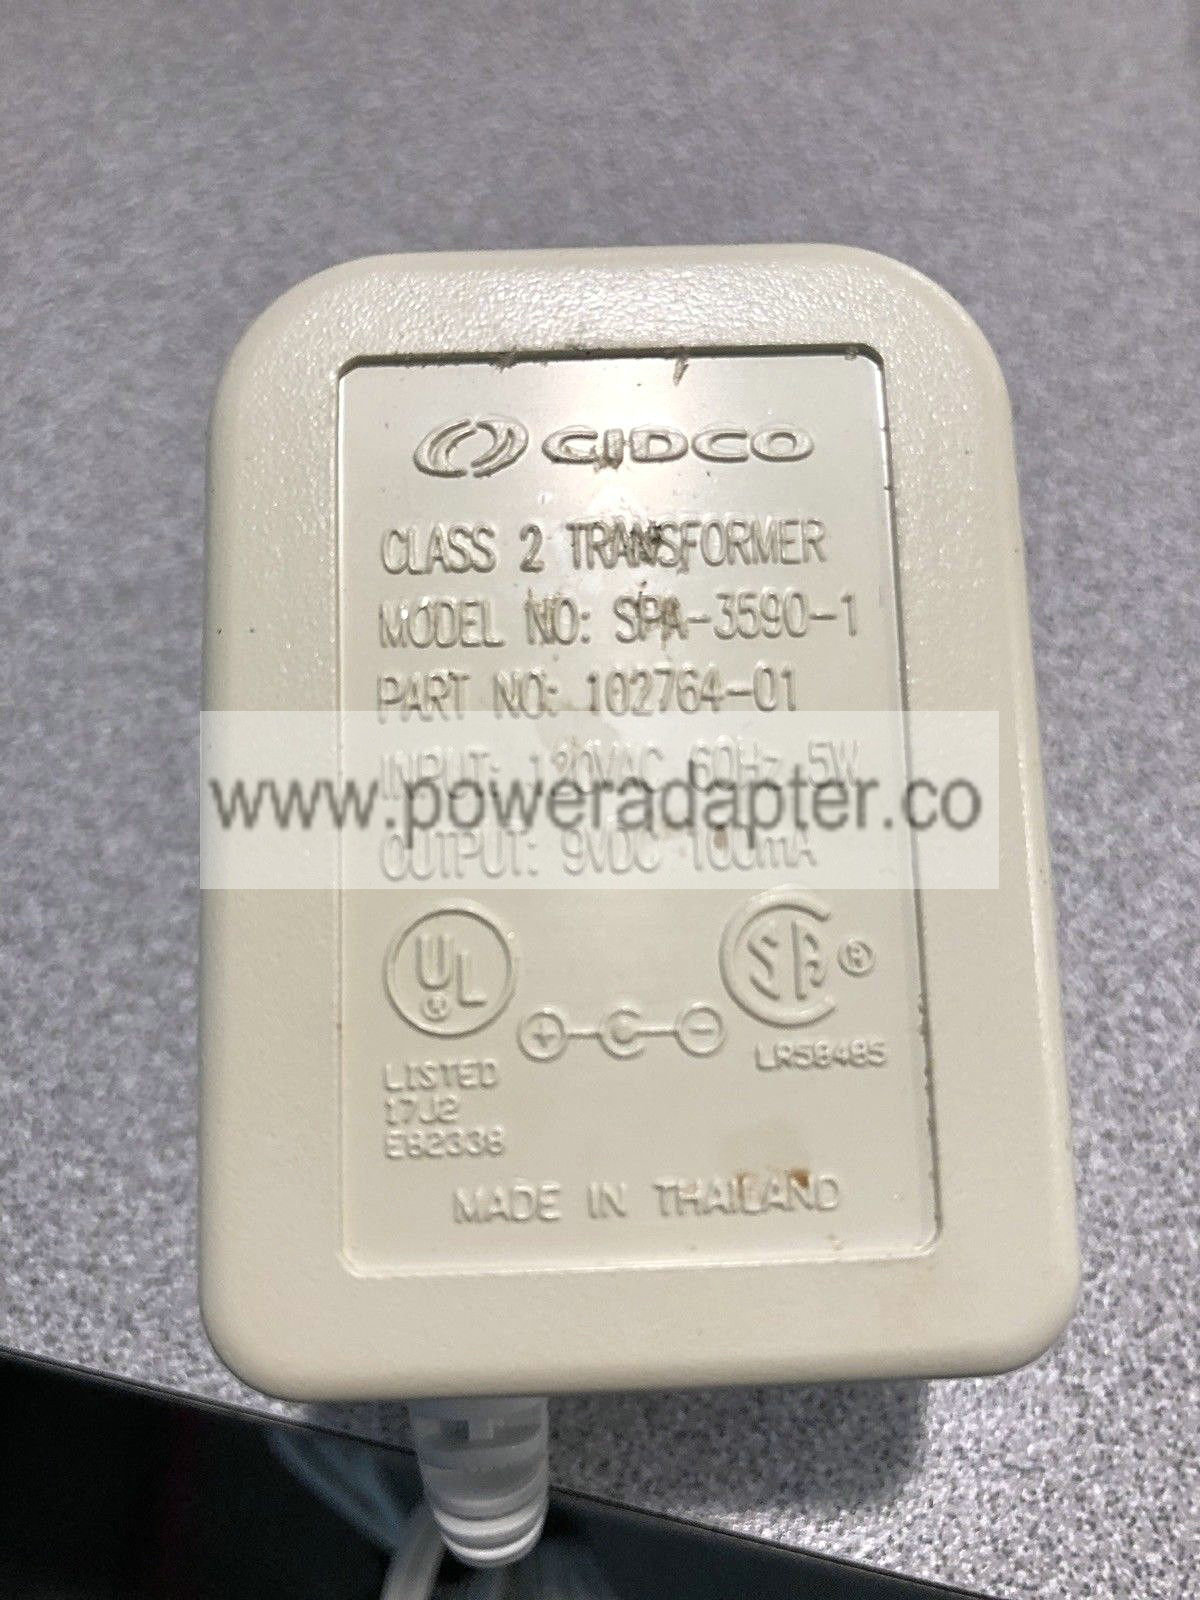 CIDCO SPA-3590-1 Class 2 Transformer Power Supply AC Adapter Output DC 9V 100mA Cidco Class 2 Transformer Model numb - Click Image to Close